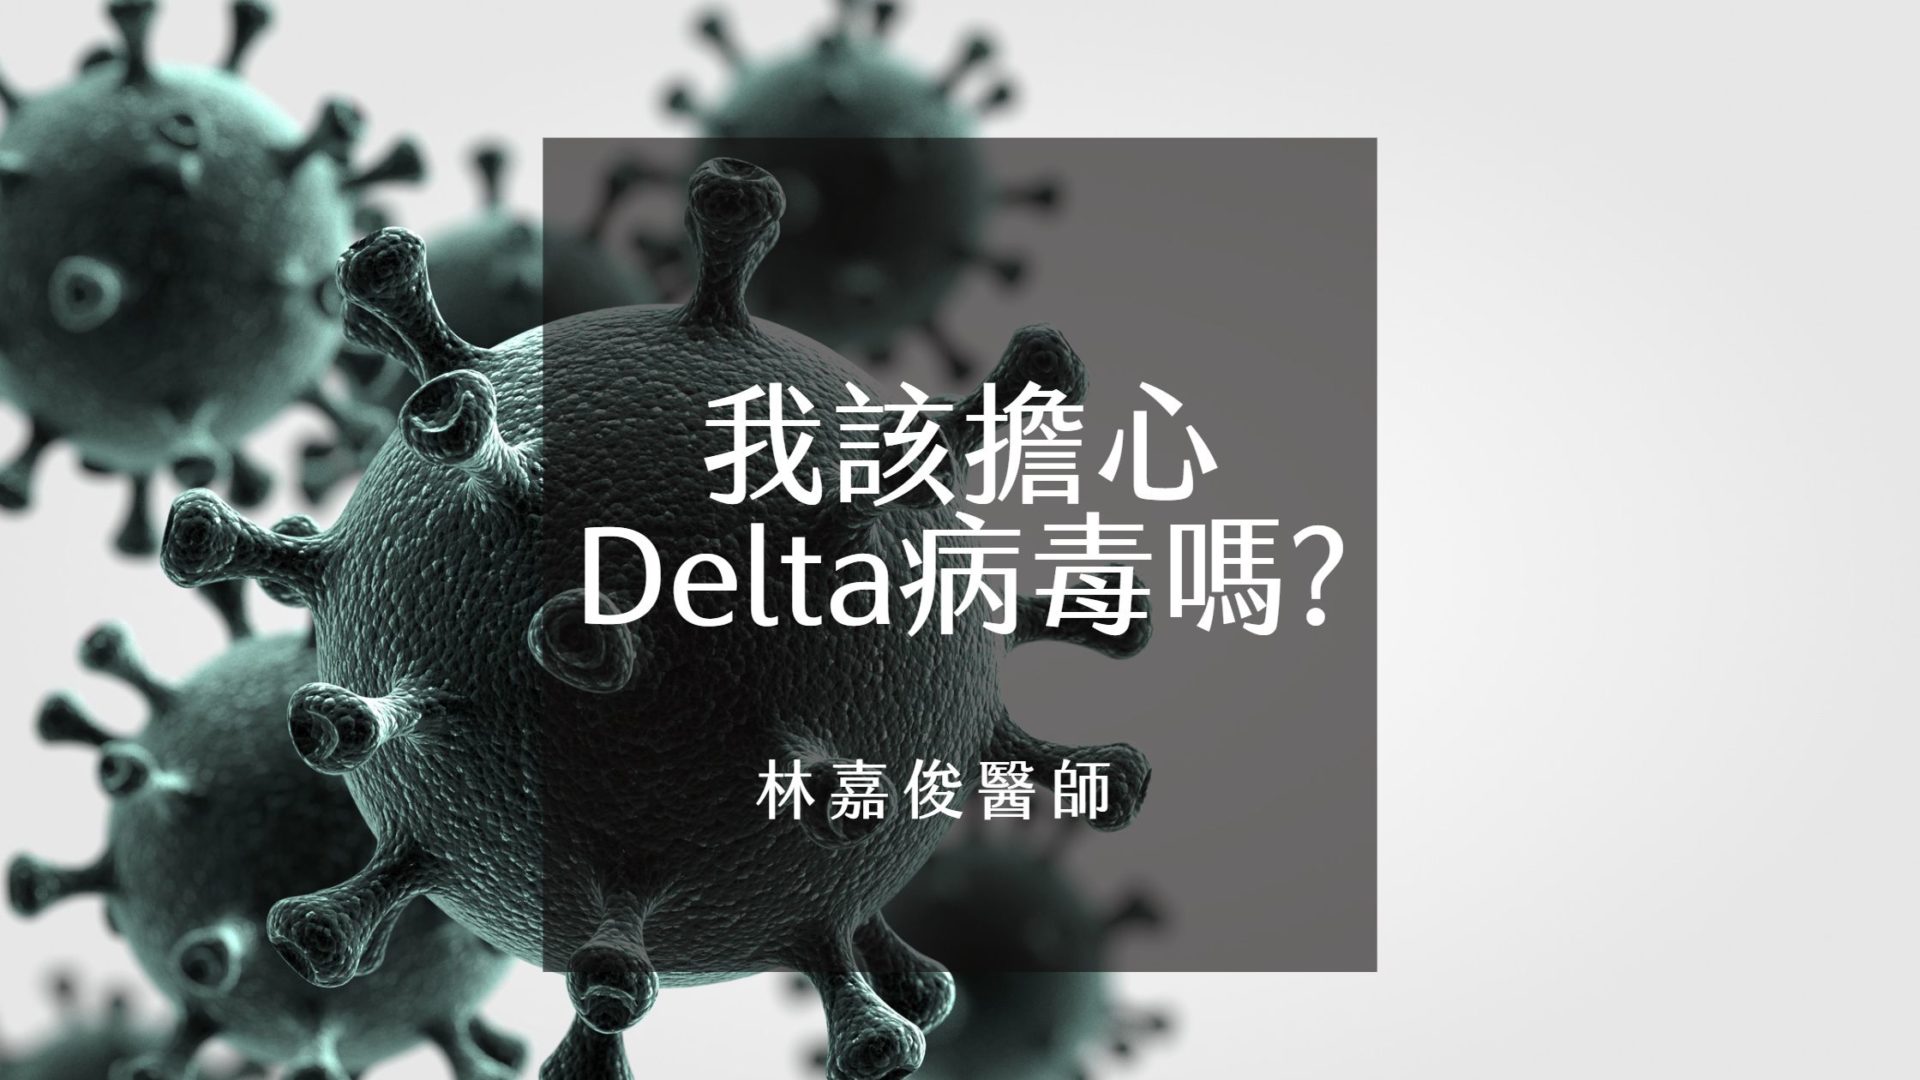 我該擔心Delta病毒嗎?